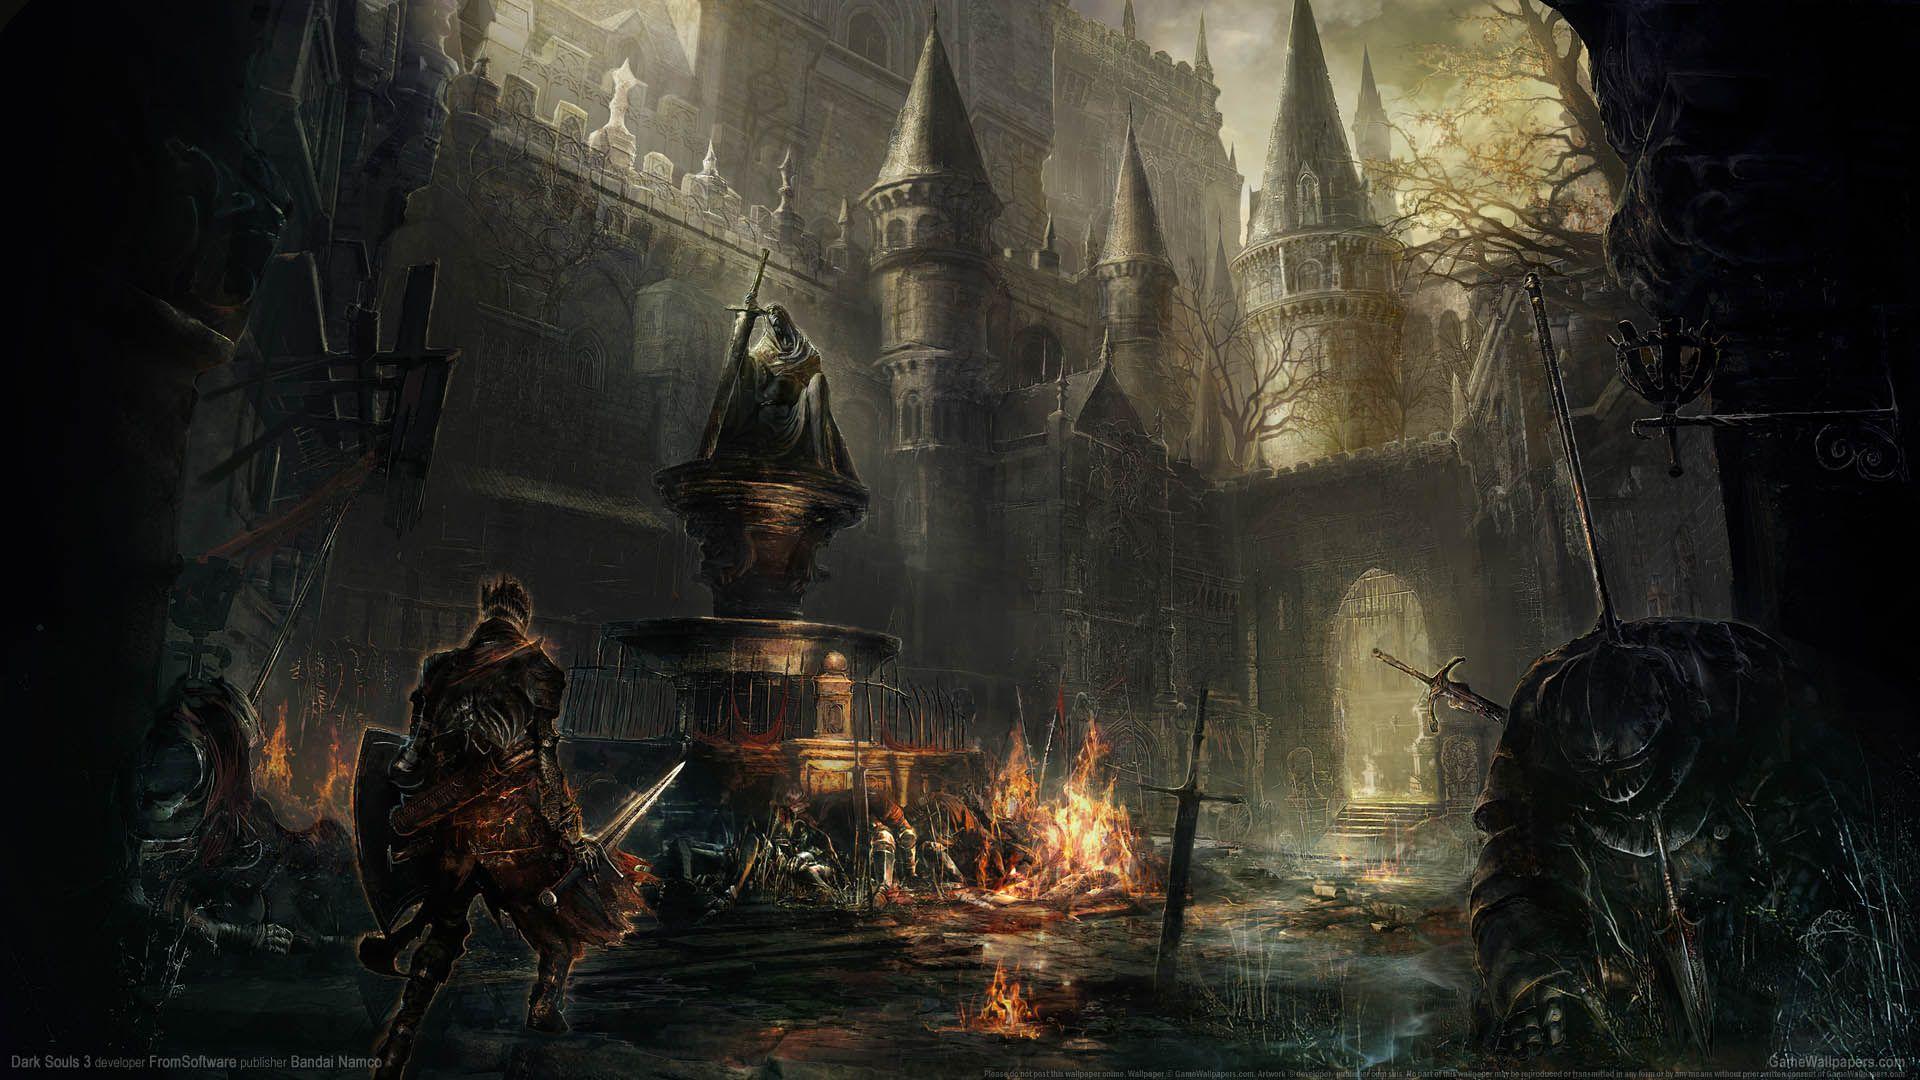 Dark Souls 3 wallpaper or desktop background